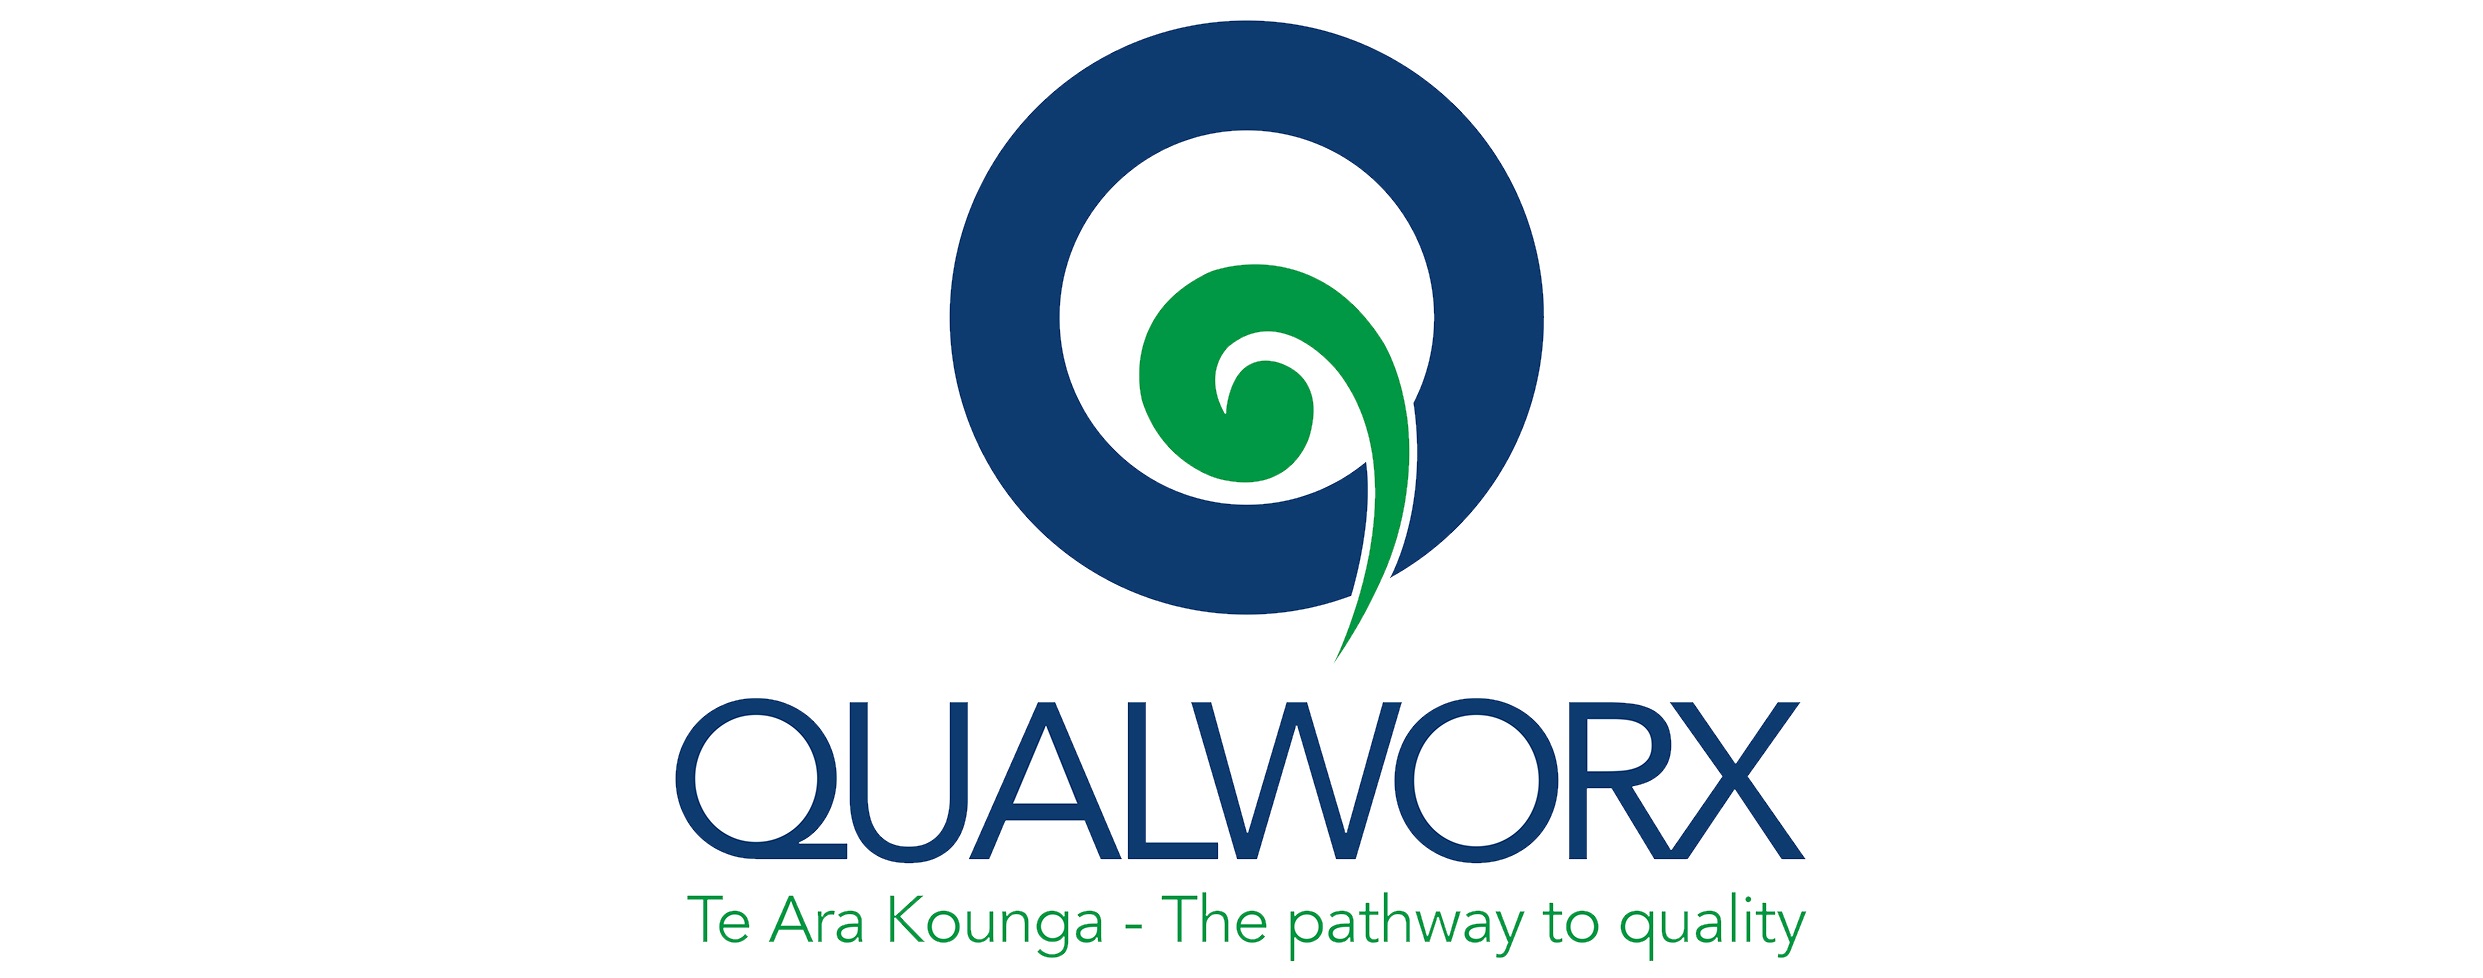 Qualworx Logo